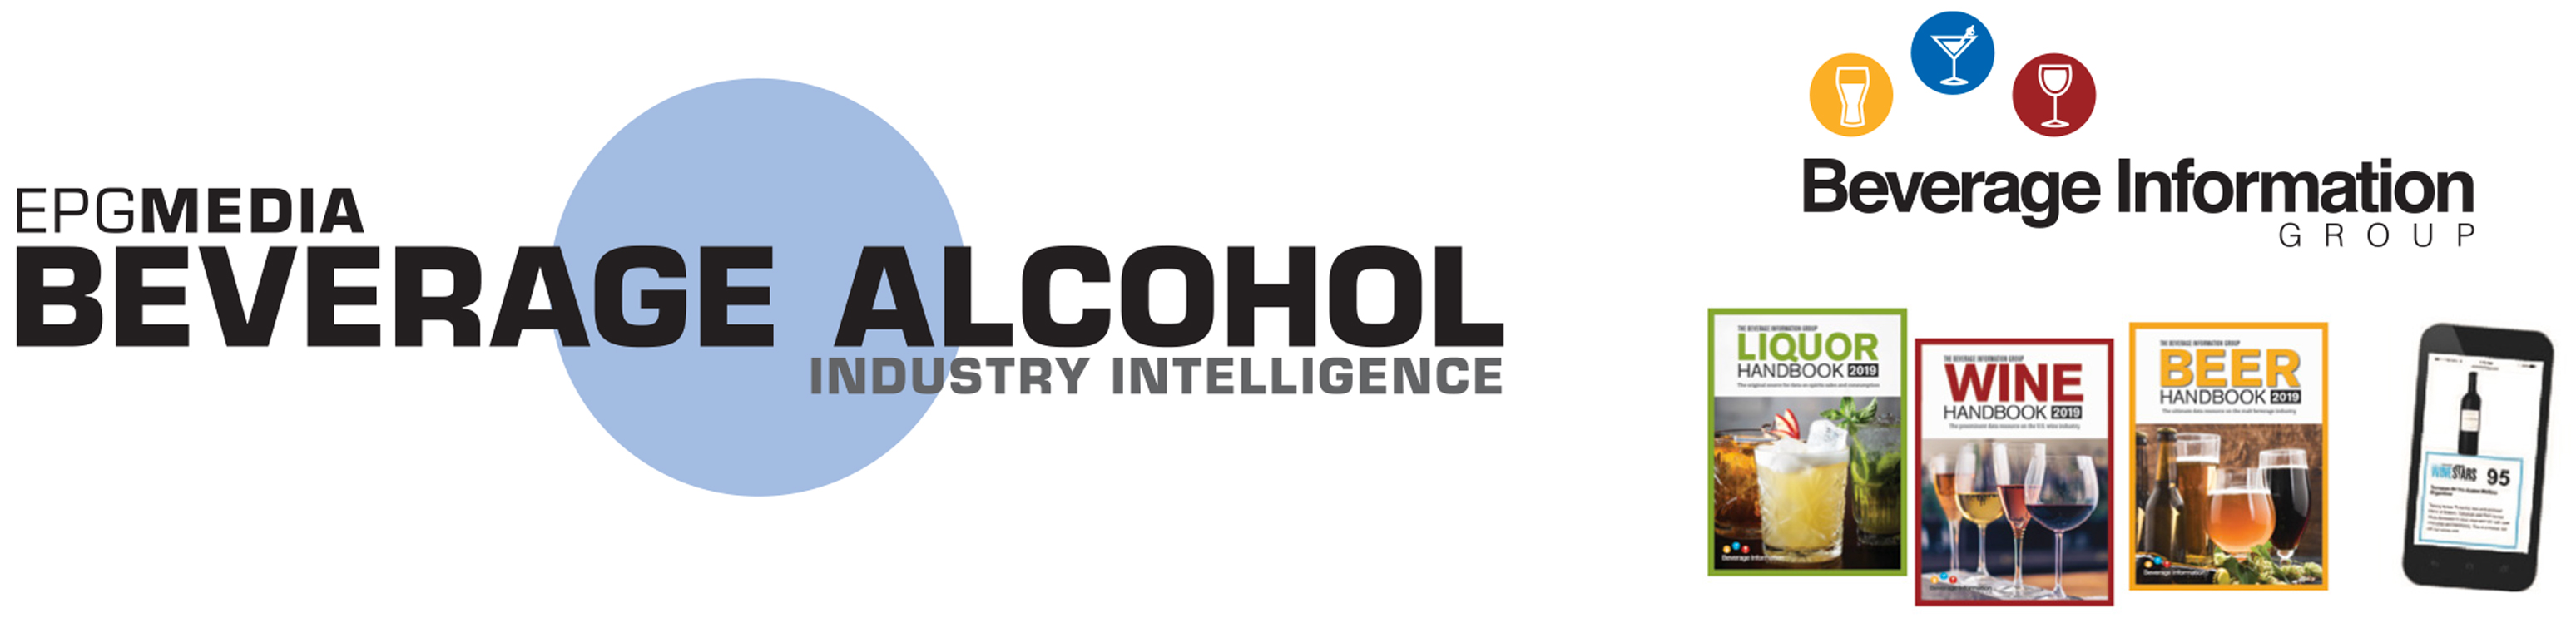 EPG Media Beverage Alcohol Industry Intellgence